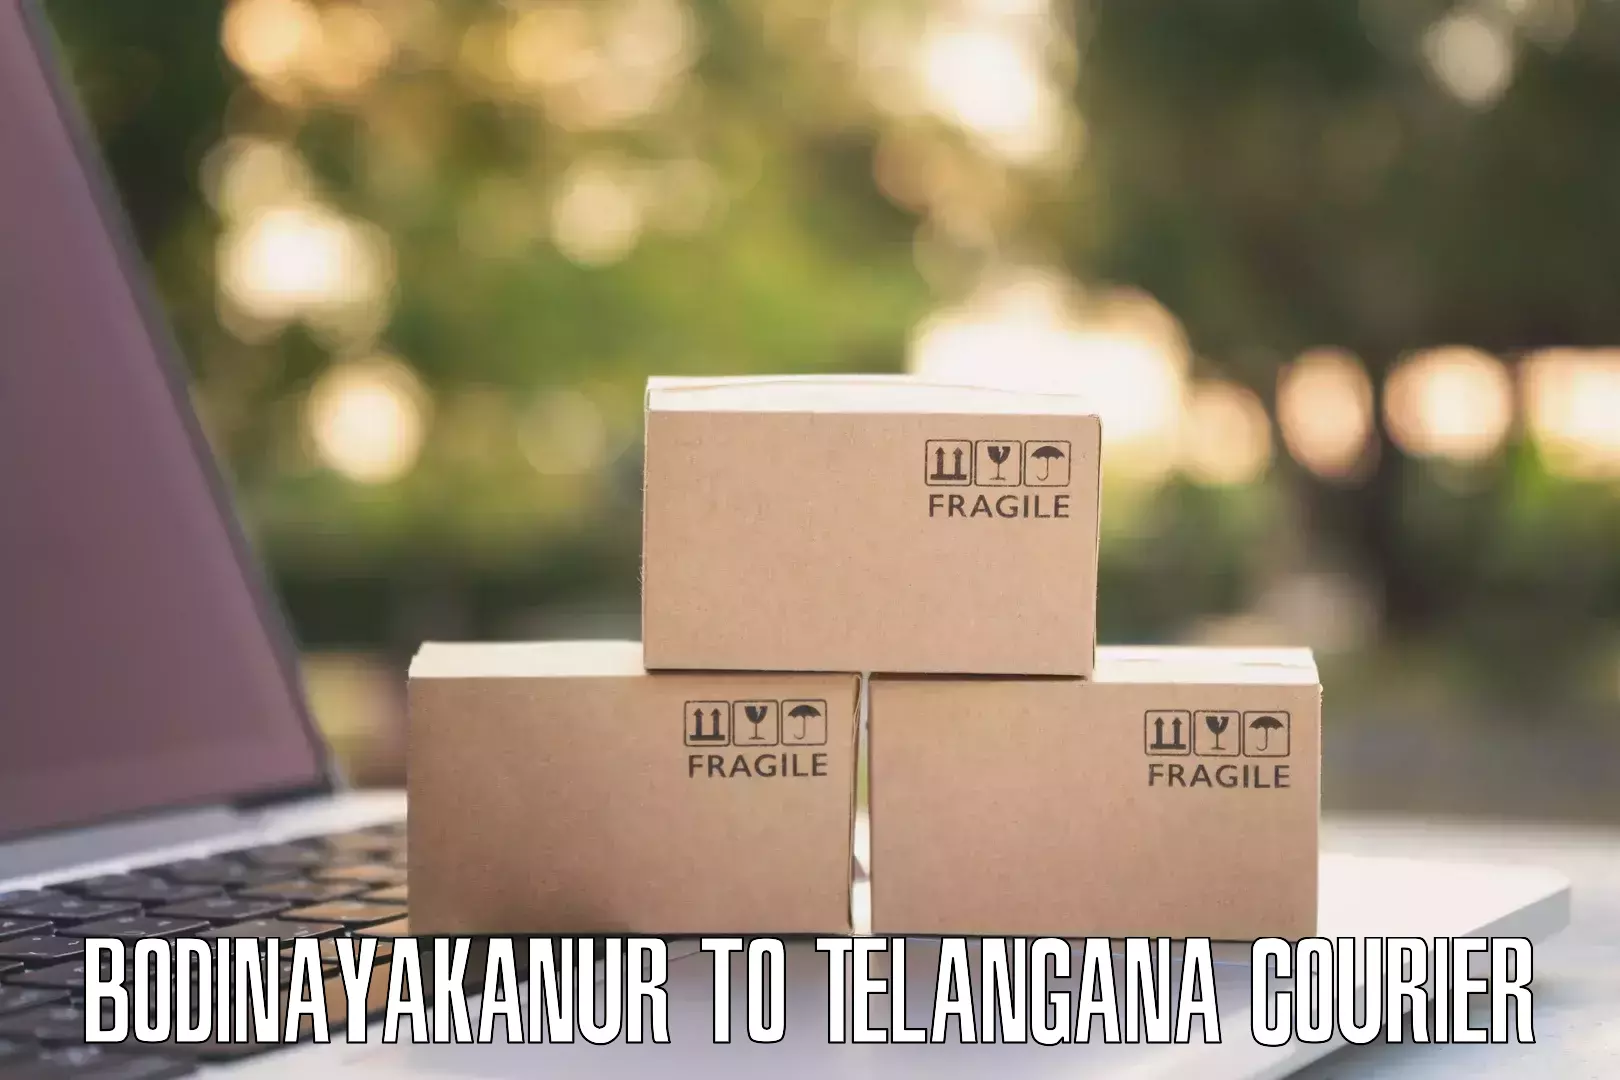 International courier networks Bodinayakanur to Veenavanka